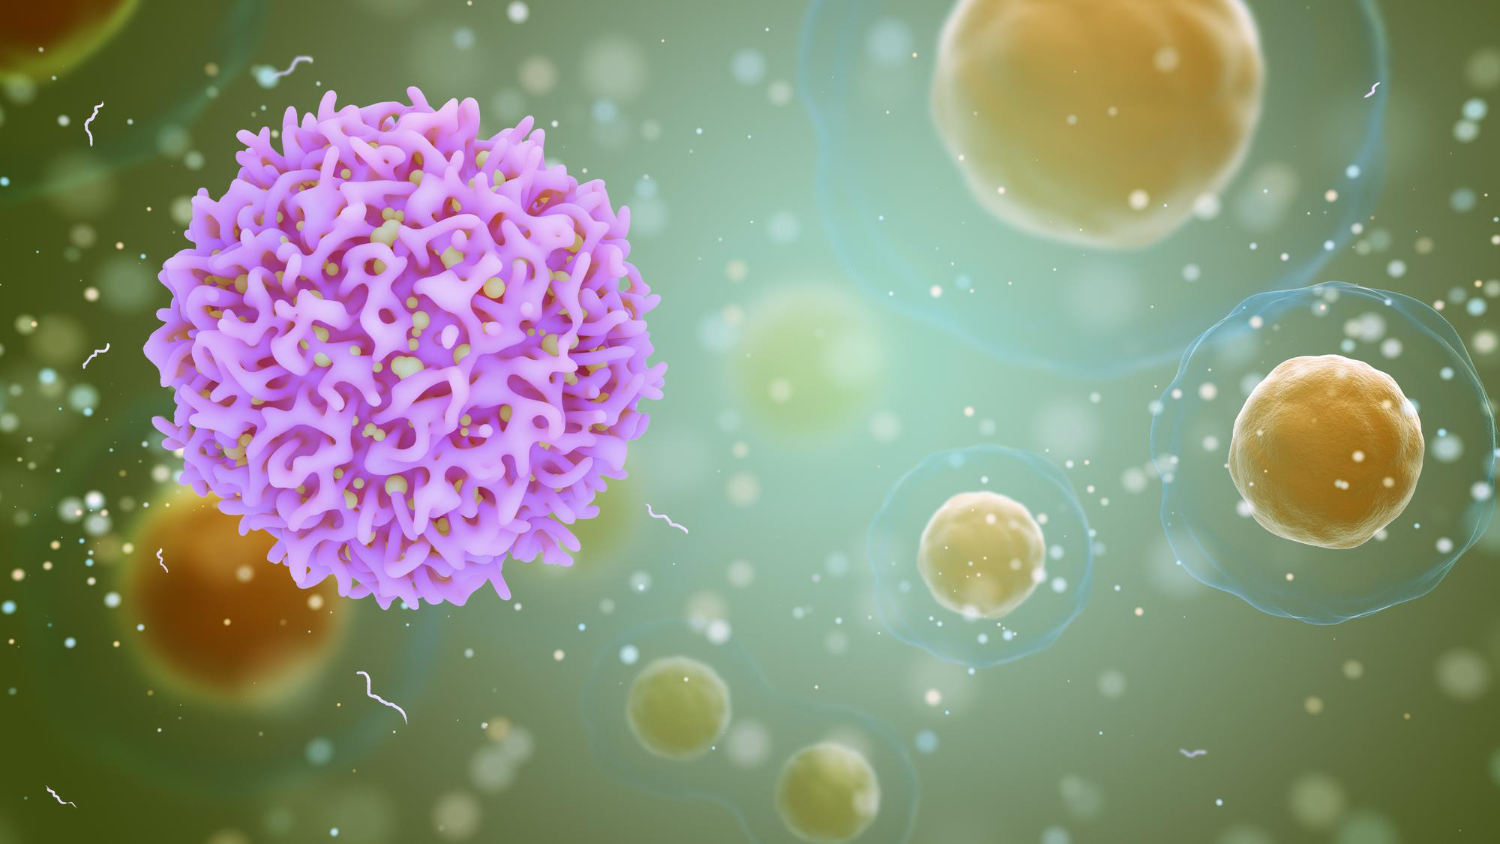 medical-concept-cancer-abstract-background-3d-illustration-t-cells-cancer-cells